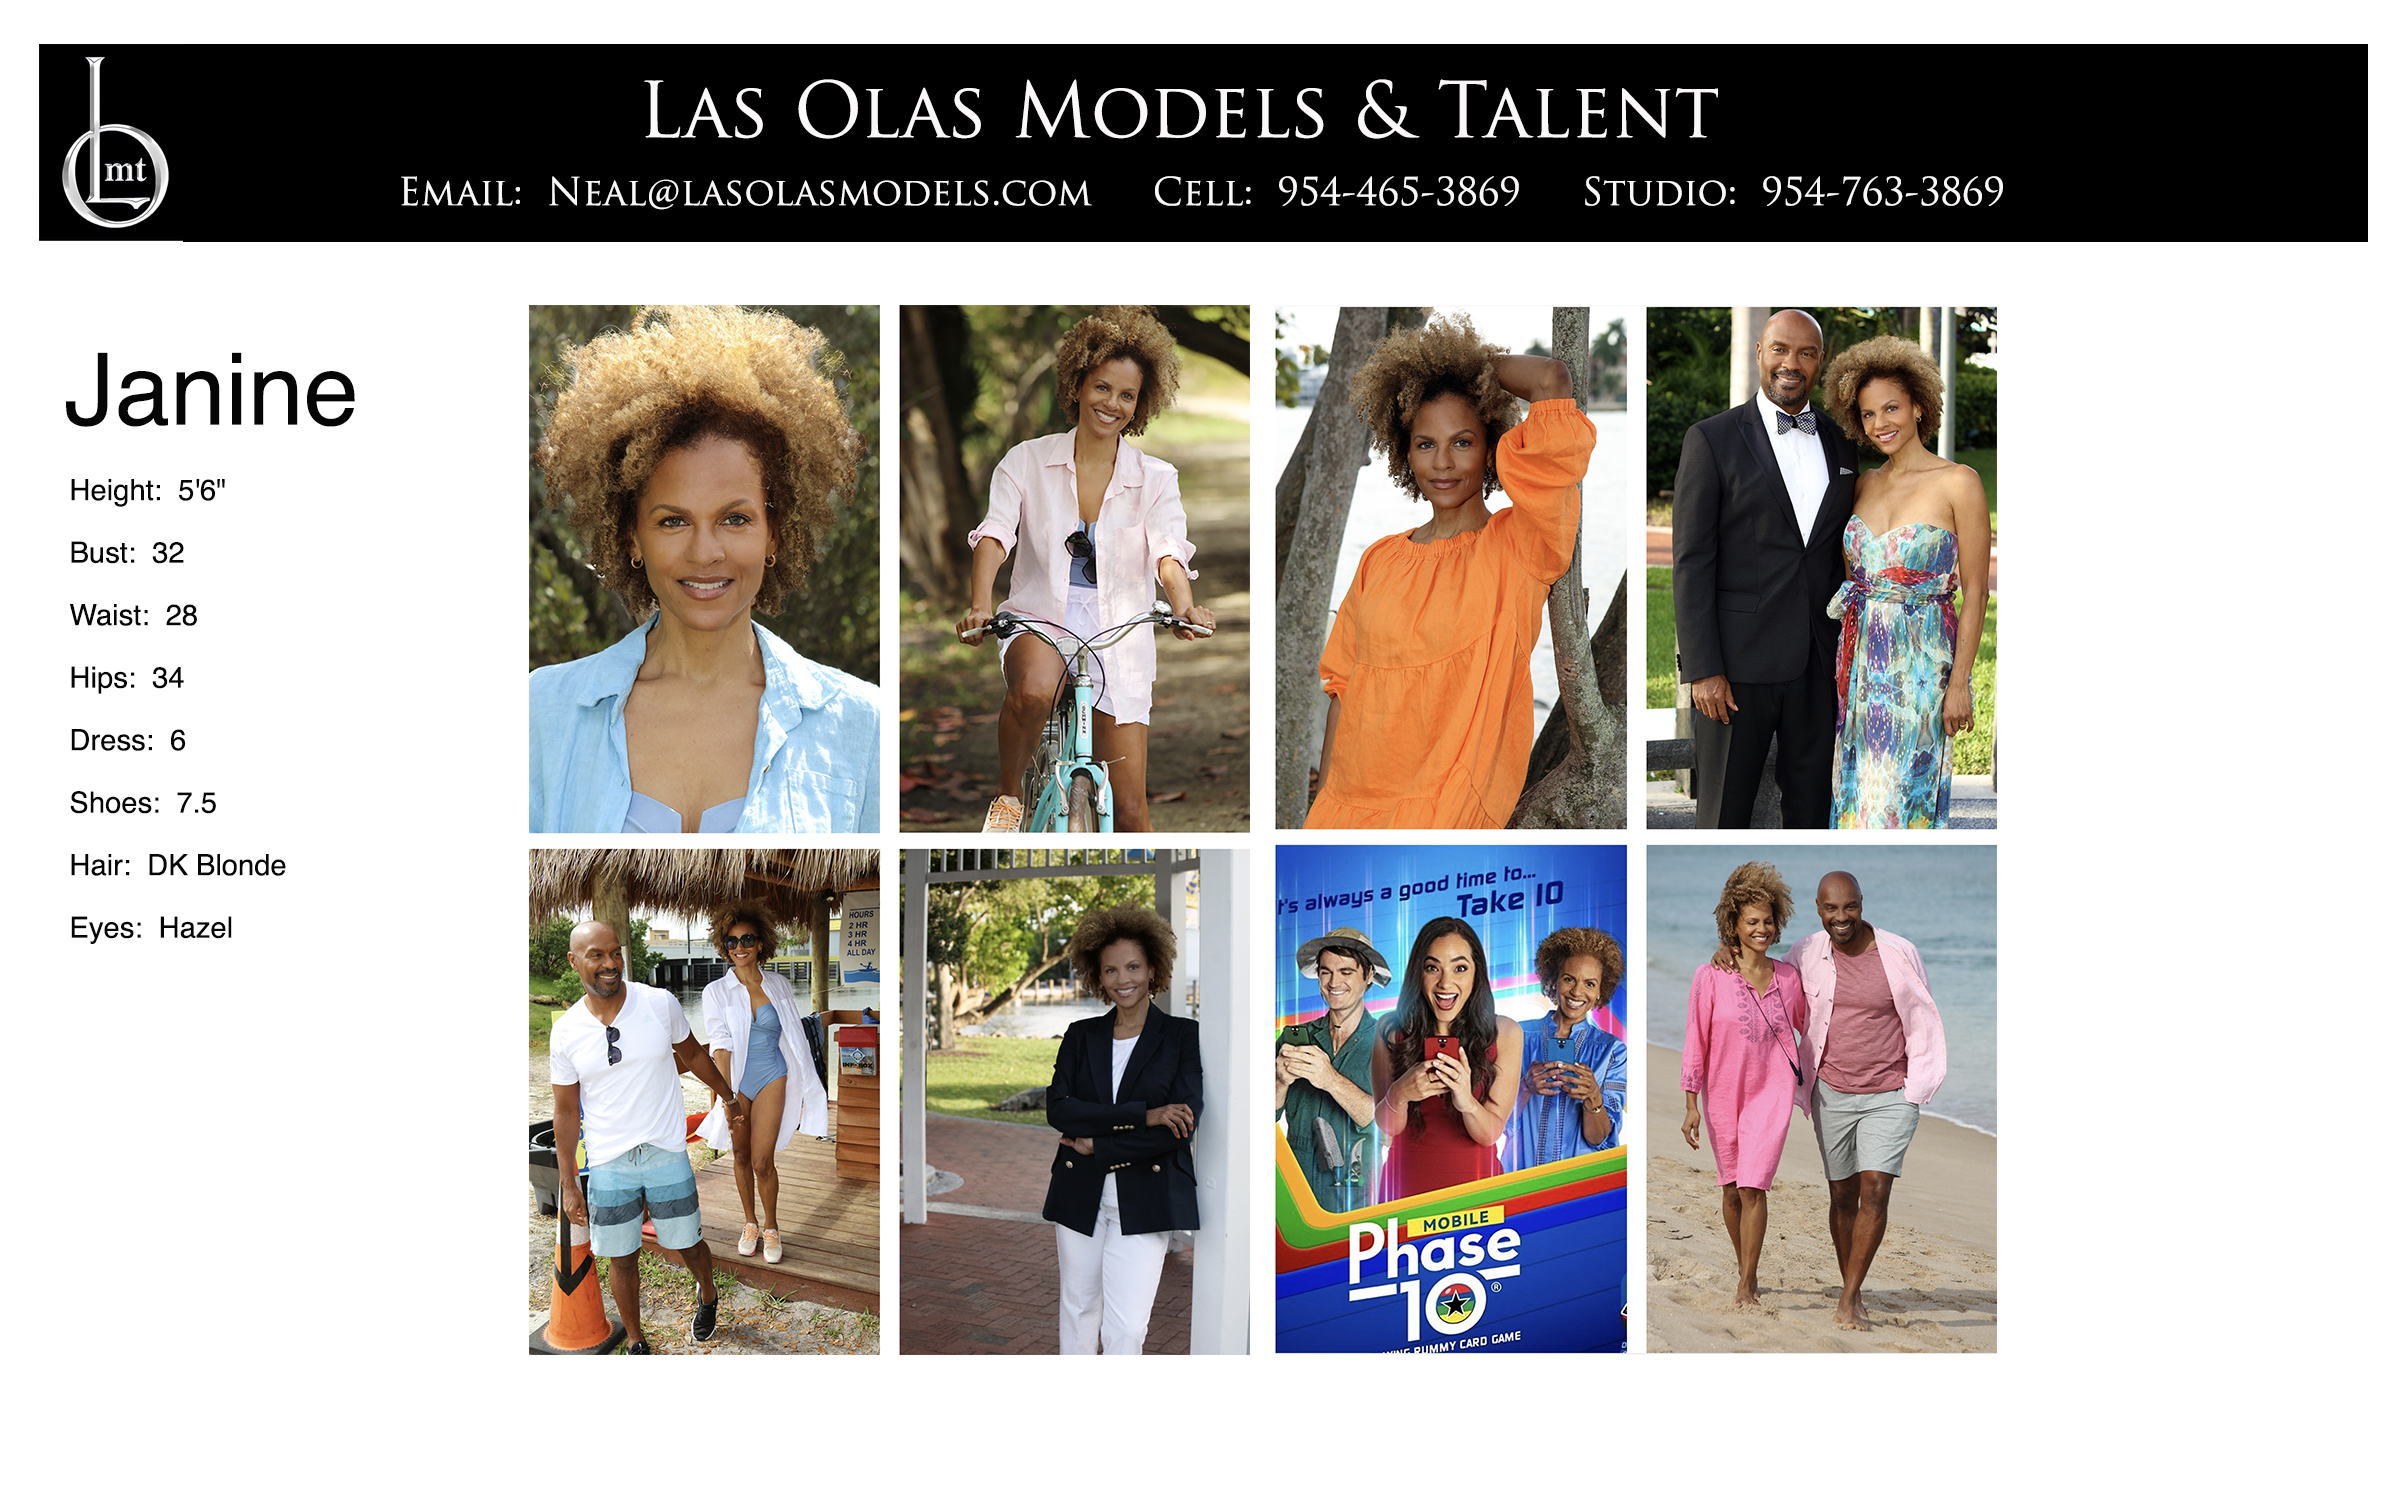 Models Fort Lauderdale Miami South Florida - Print Video Commercial Catalog - Las Olas Models & Talent - Janine  Comp